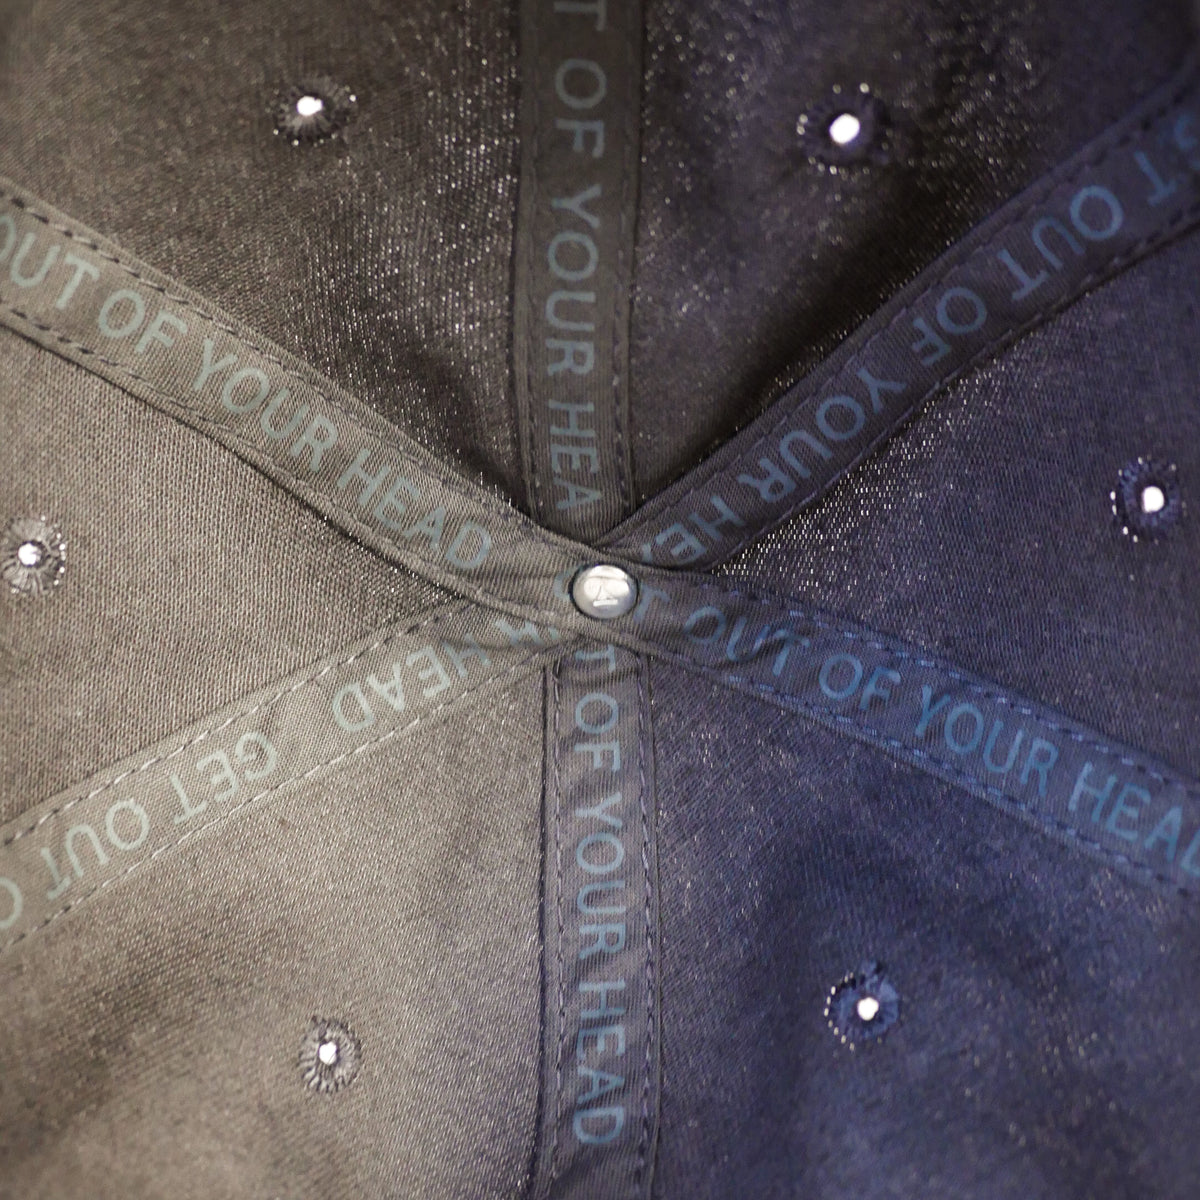 Louis Vuitton Monogram Washed Denim Cap Blue Denim